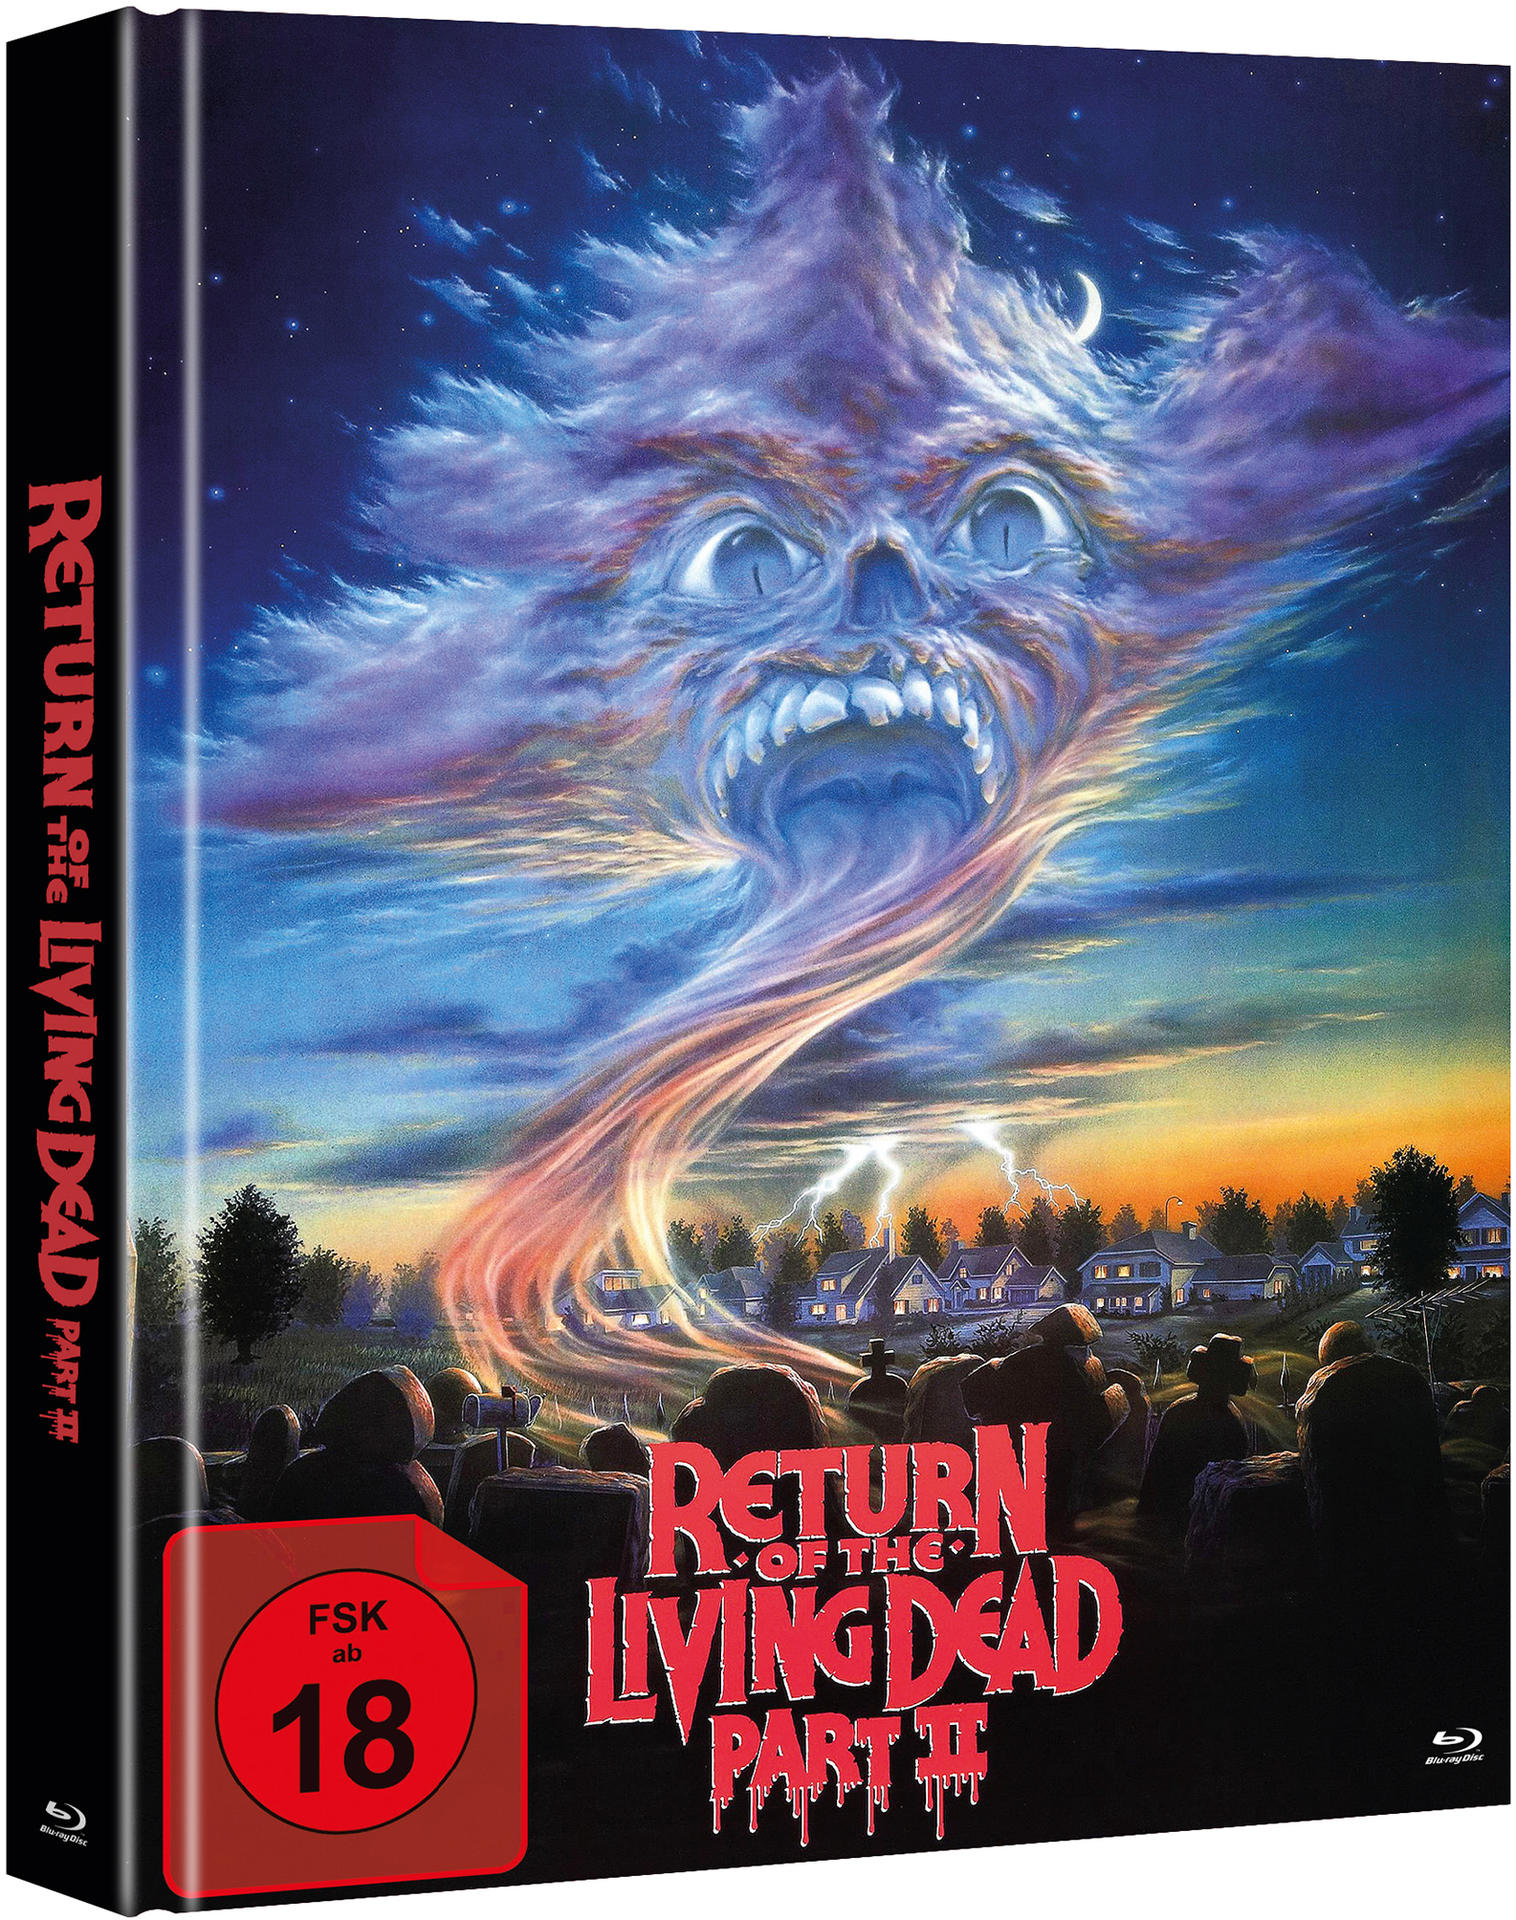 Return of the Living Blu-ray II Dead